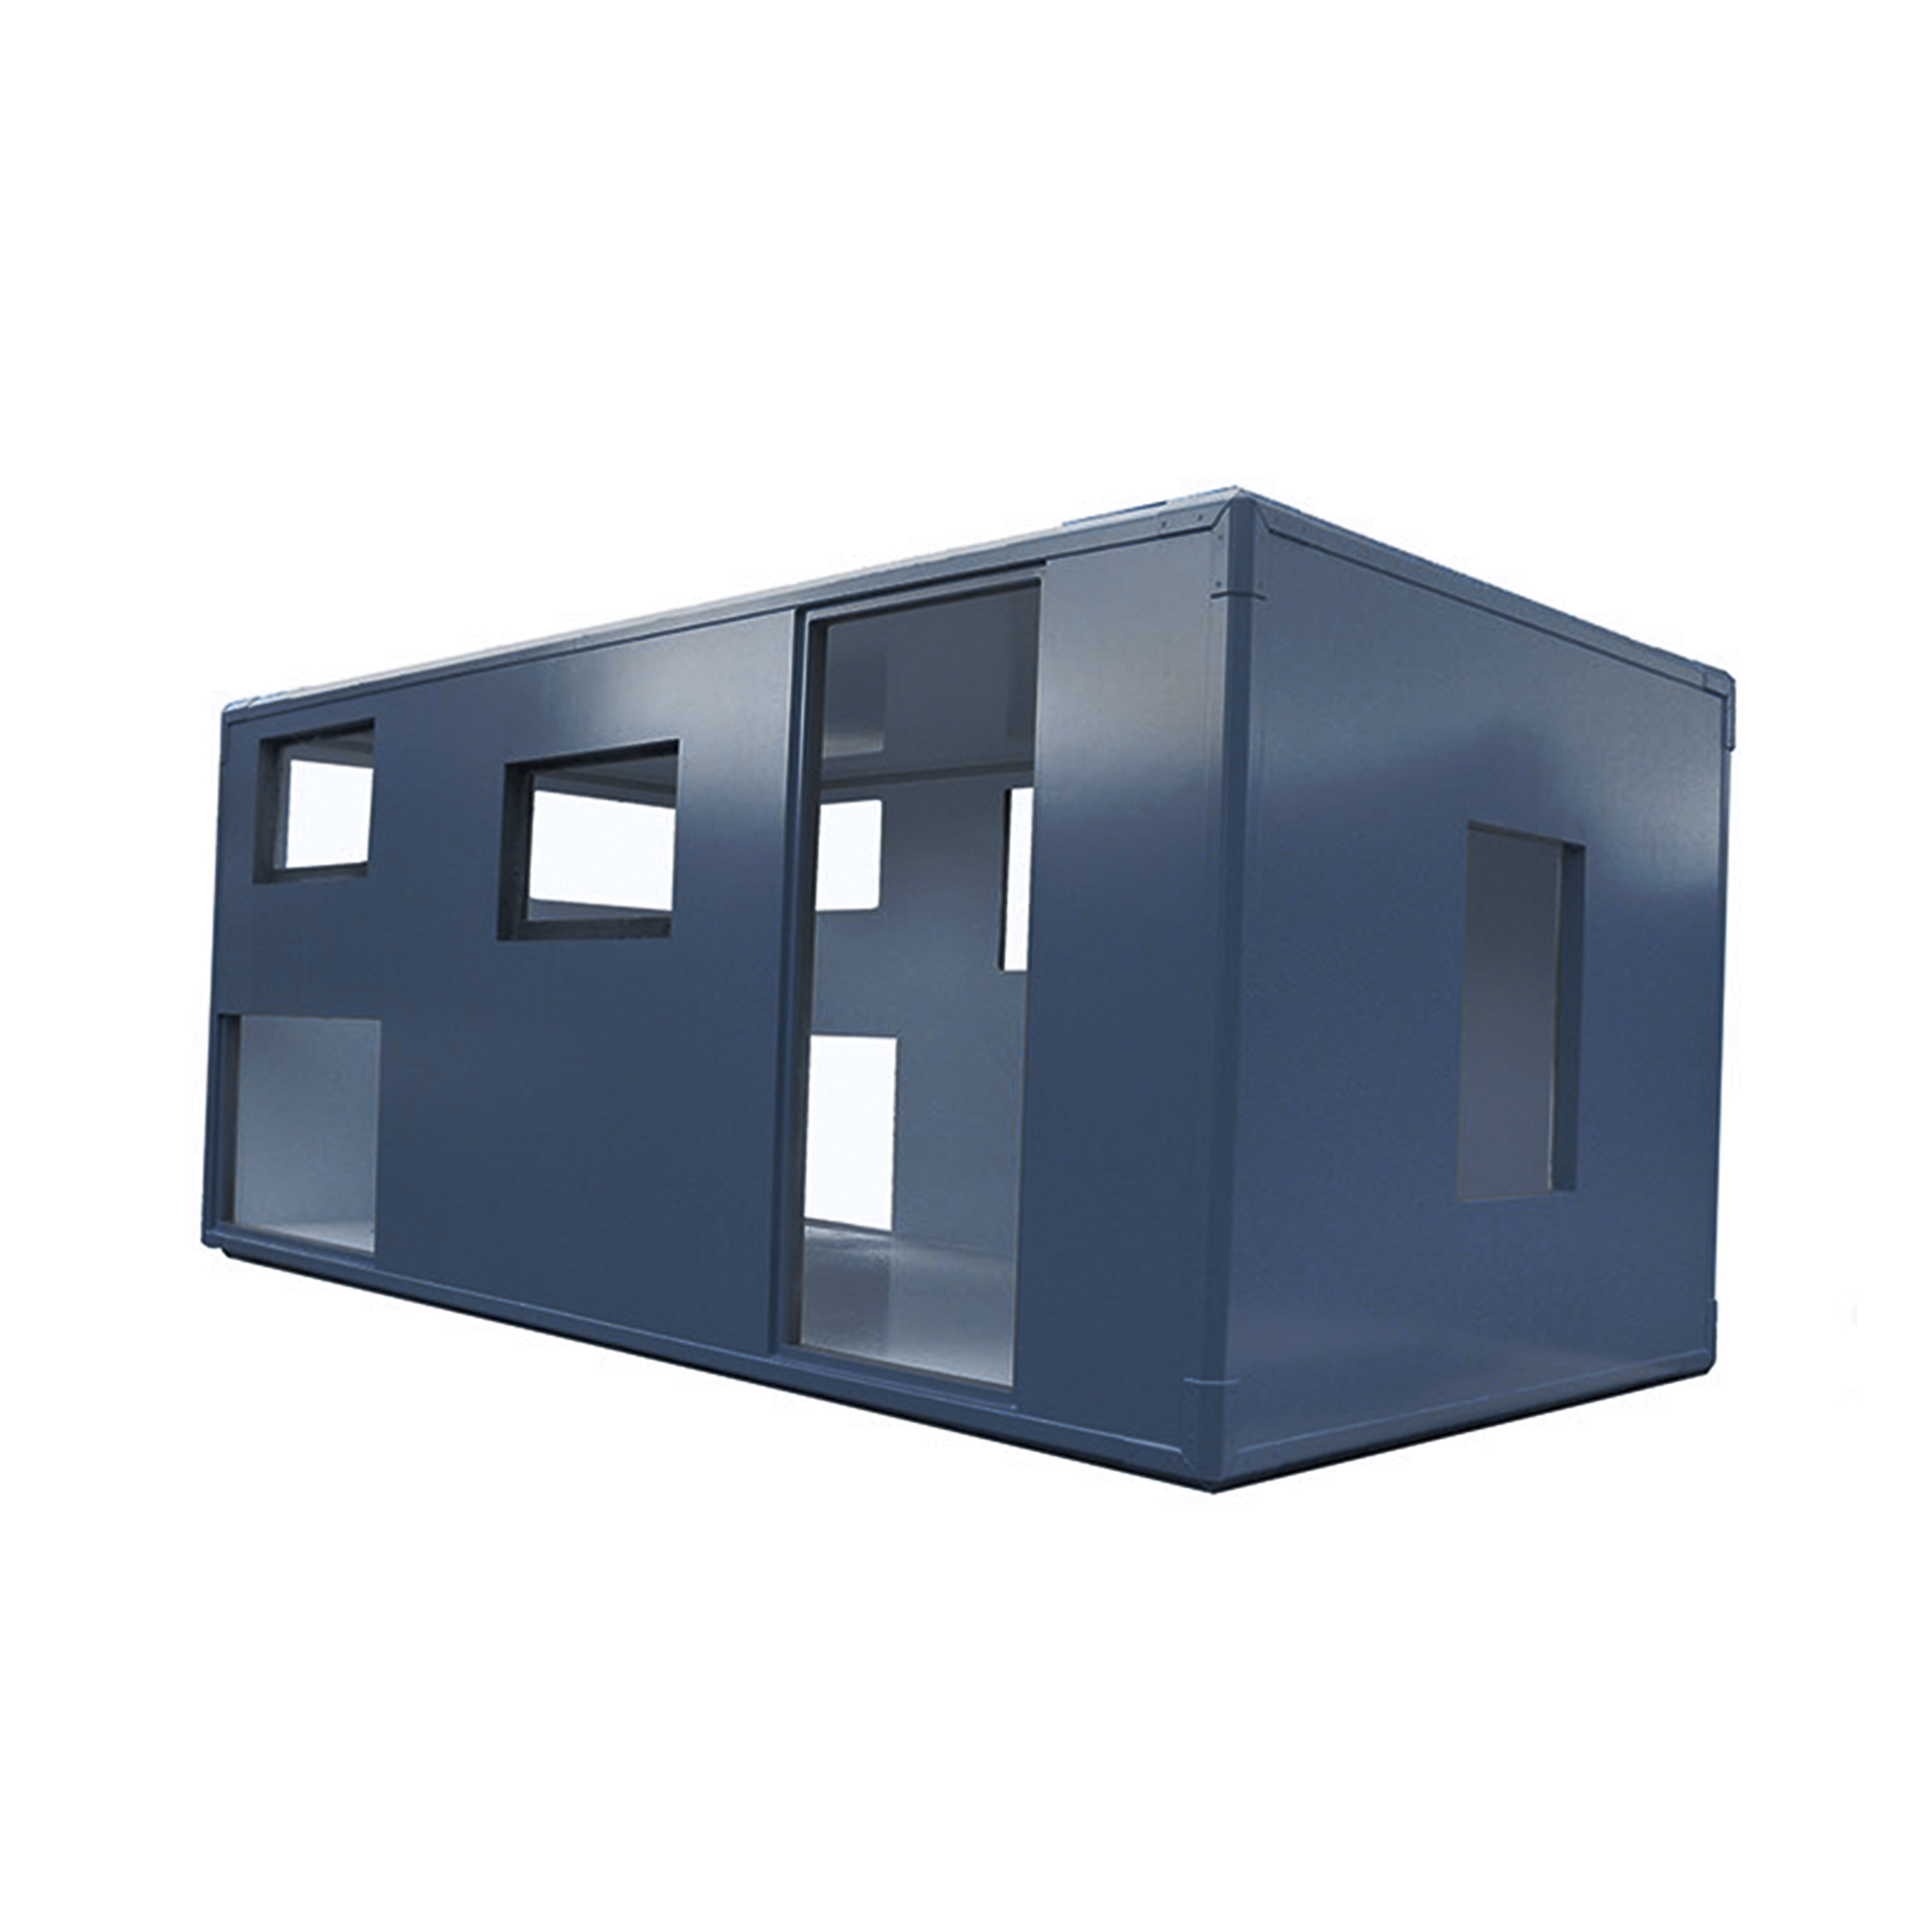 Rechteckige Box – Basisbox, isolierter Wohnmobil-LKW-Camper-Körper